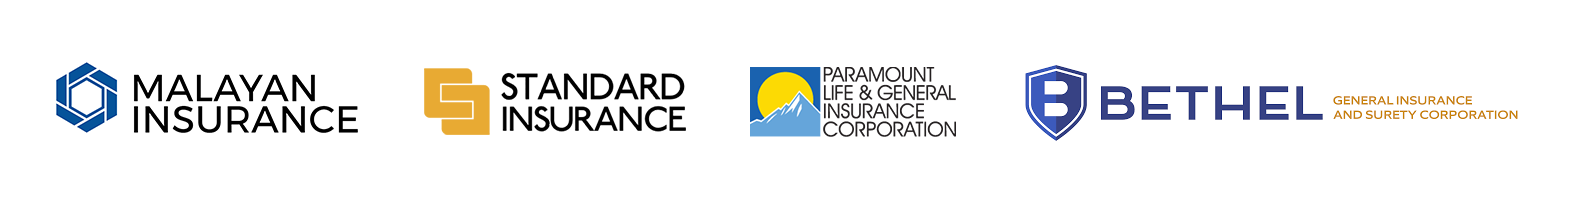 Car Insurance - Malayan Insurance - Standard Insurance - Paramount Life & General Insurance - Bethel General Insurance and Surety